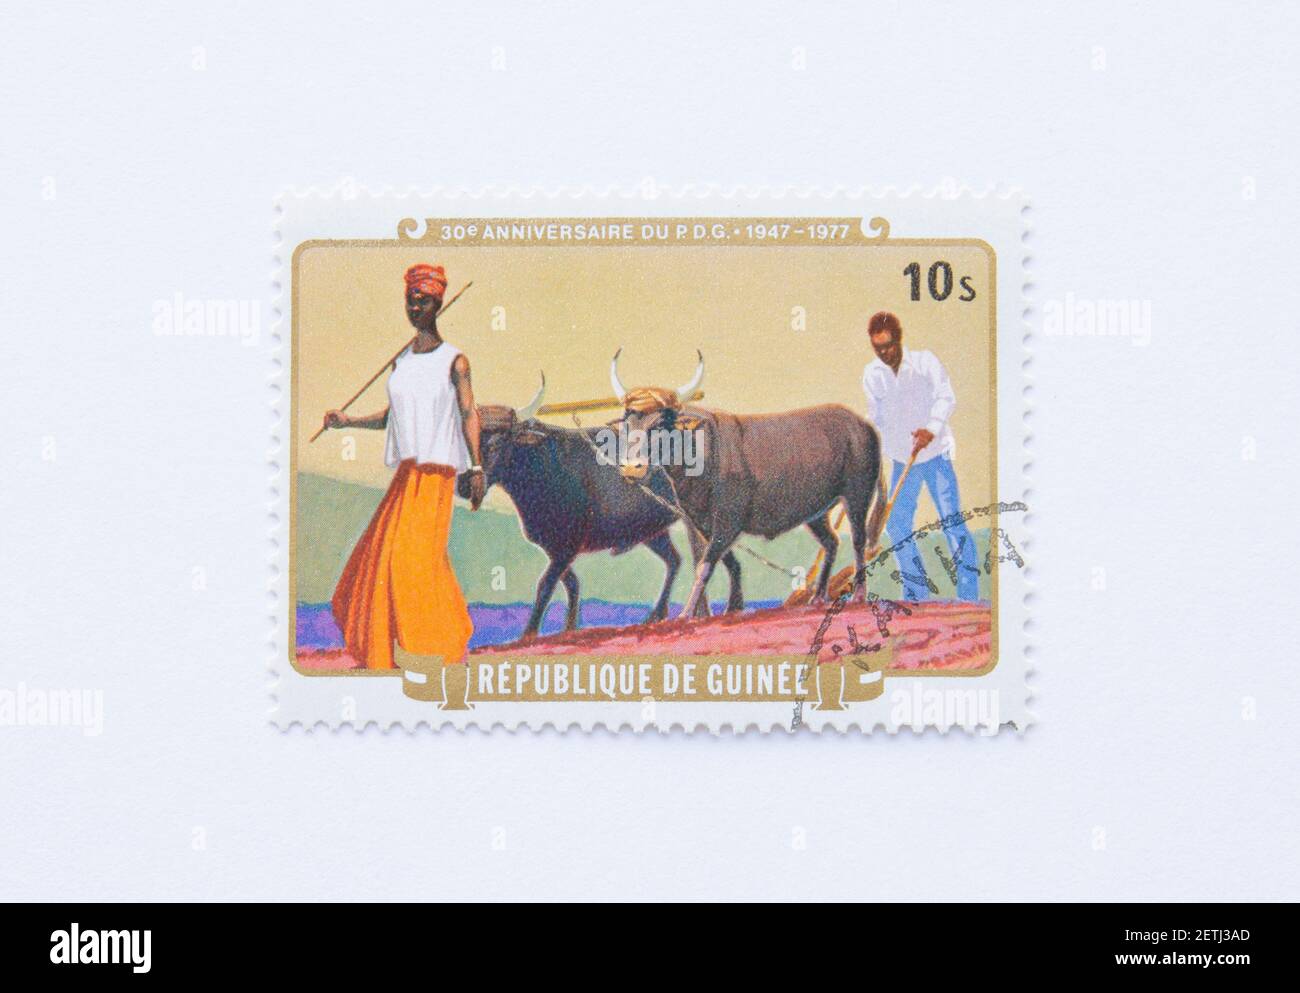 01.03.2021 Istanbul Turkey. Guinea Republic Postage Stamp. 30th Anniversary of Democratic Party of Guinea, serie, circa 1977 Stock Photo